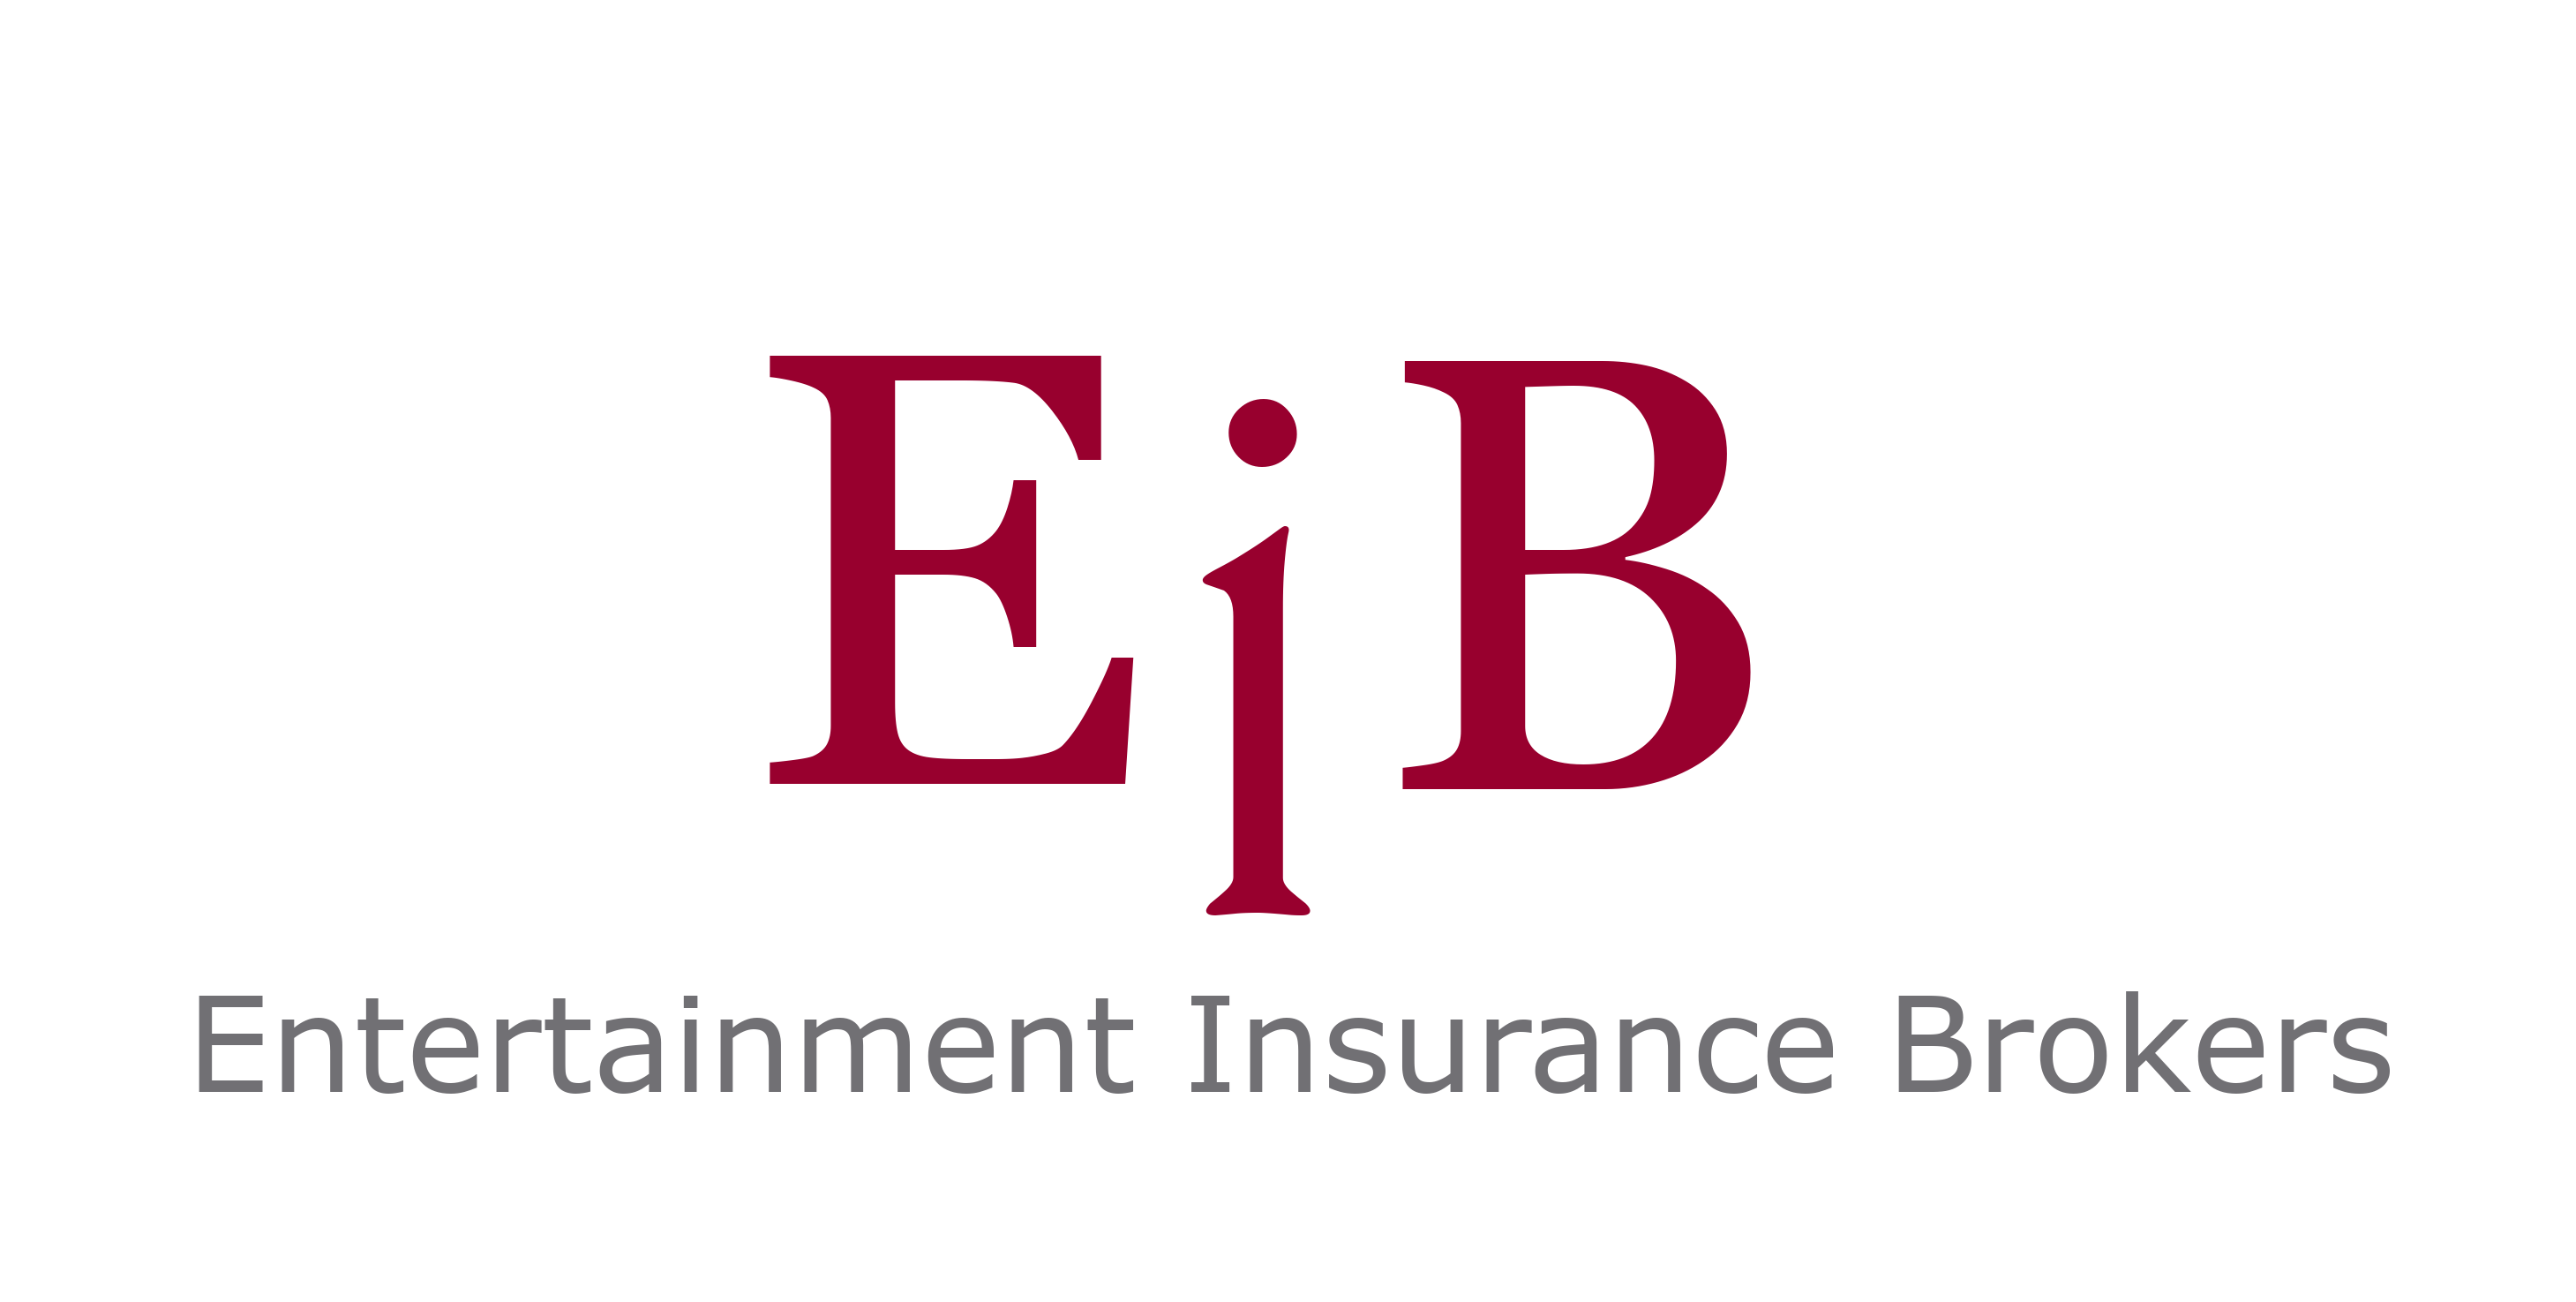 EIB Entertainment Insurance Brokers GmbH